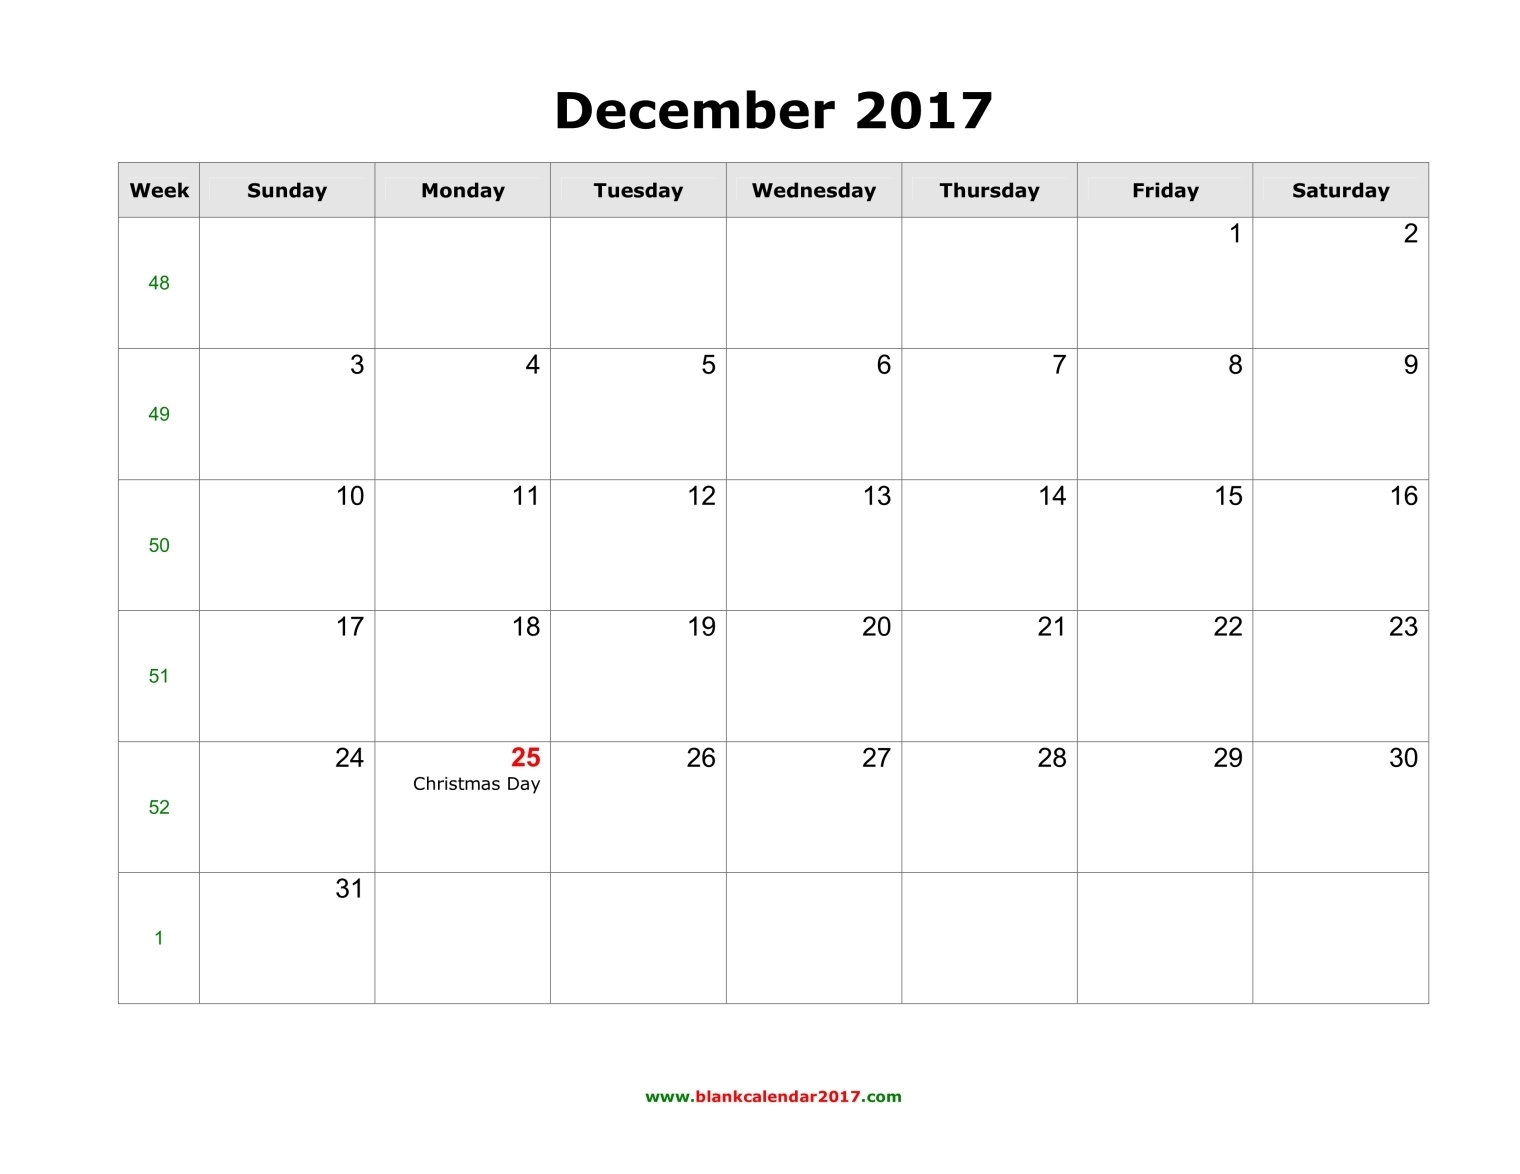 December 2017 calendar printable with holidays free